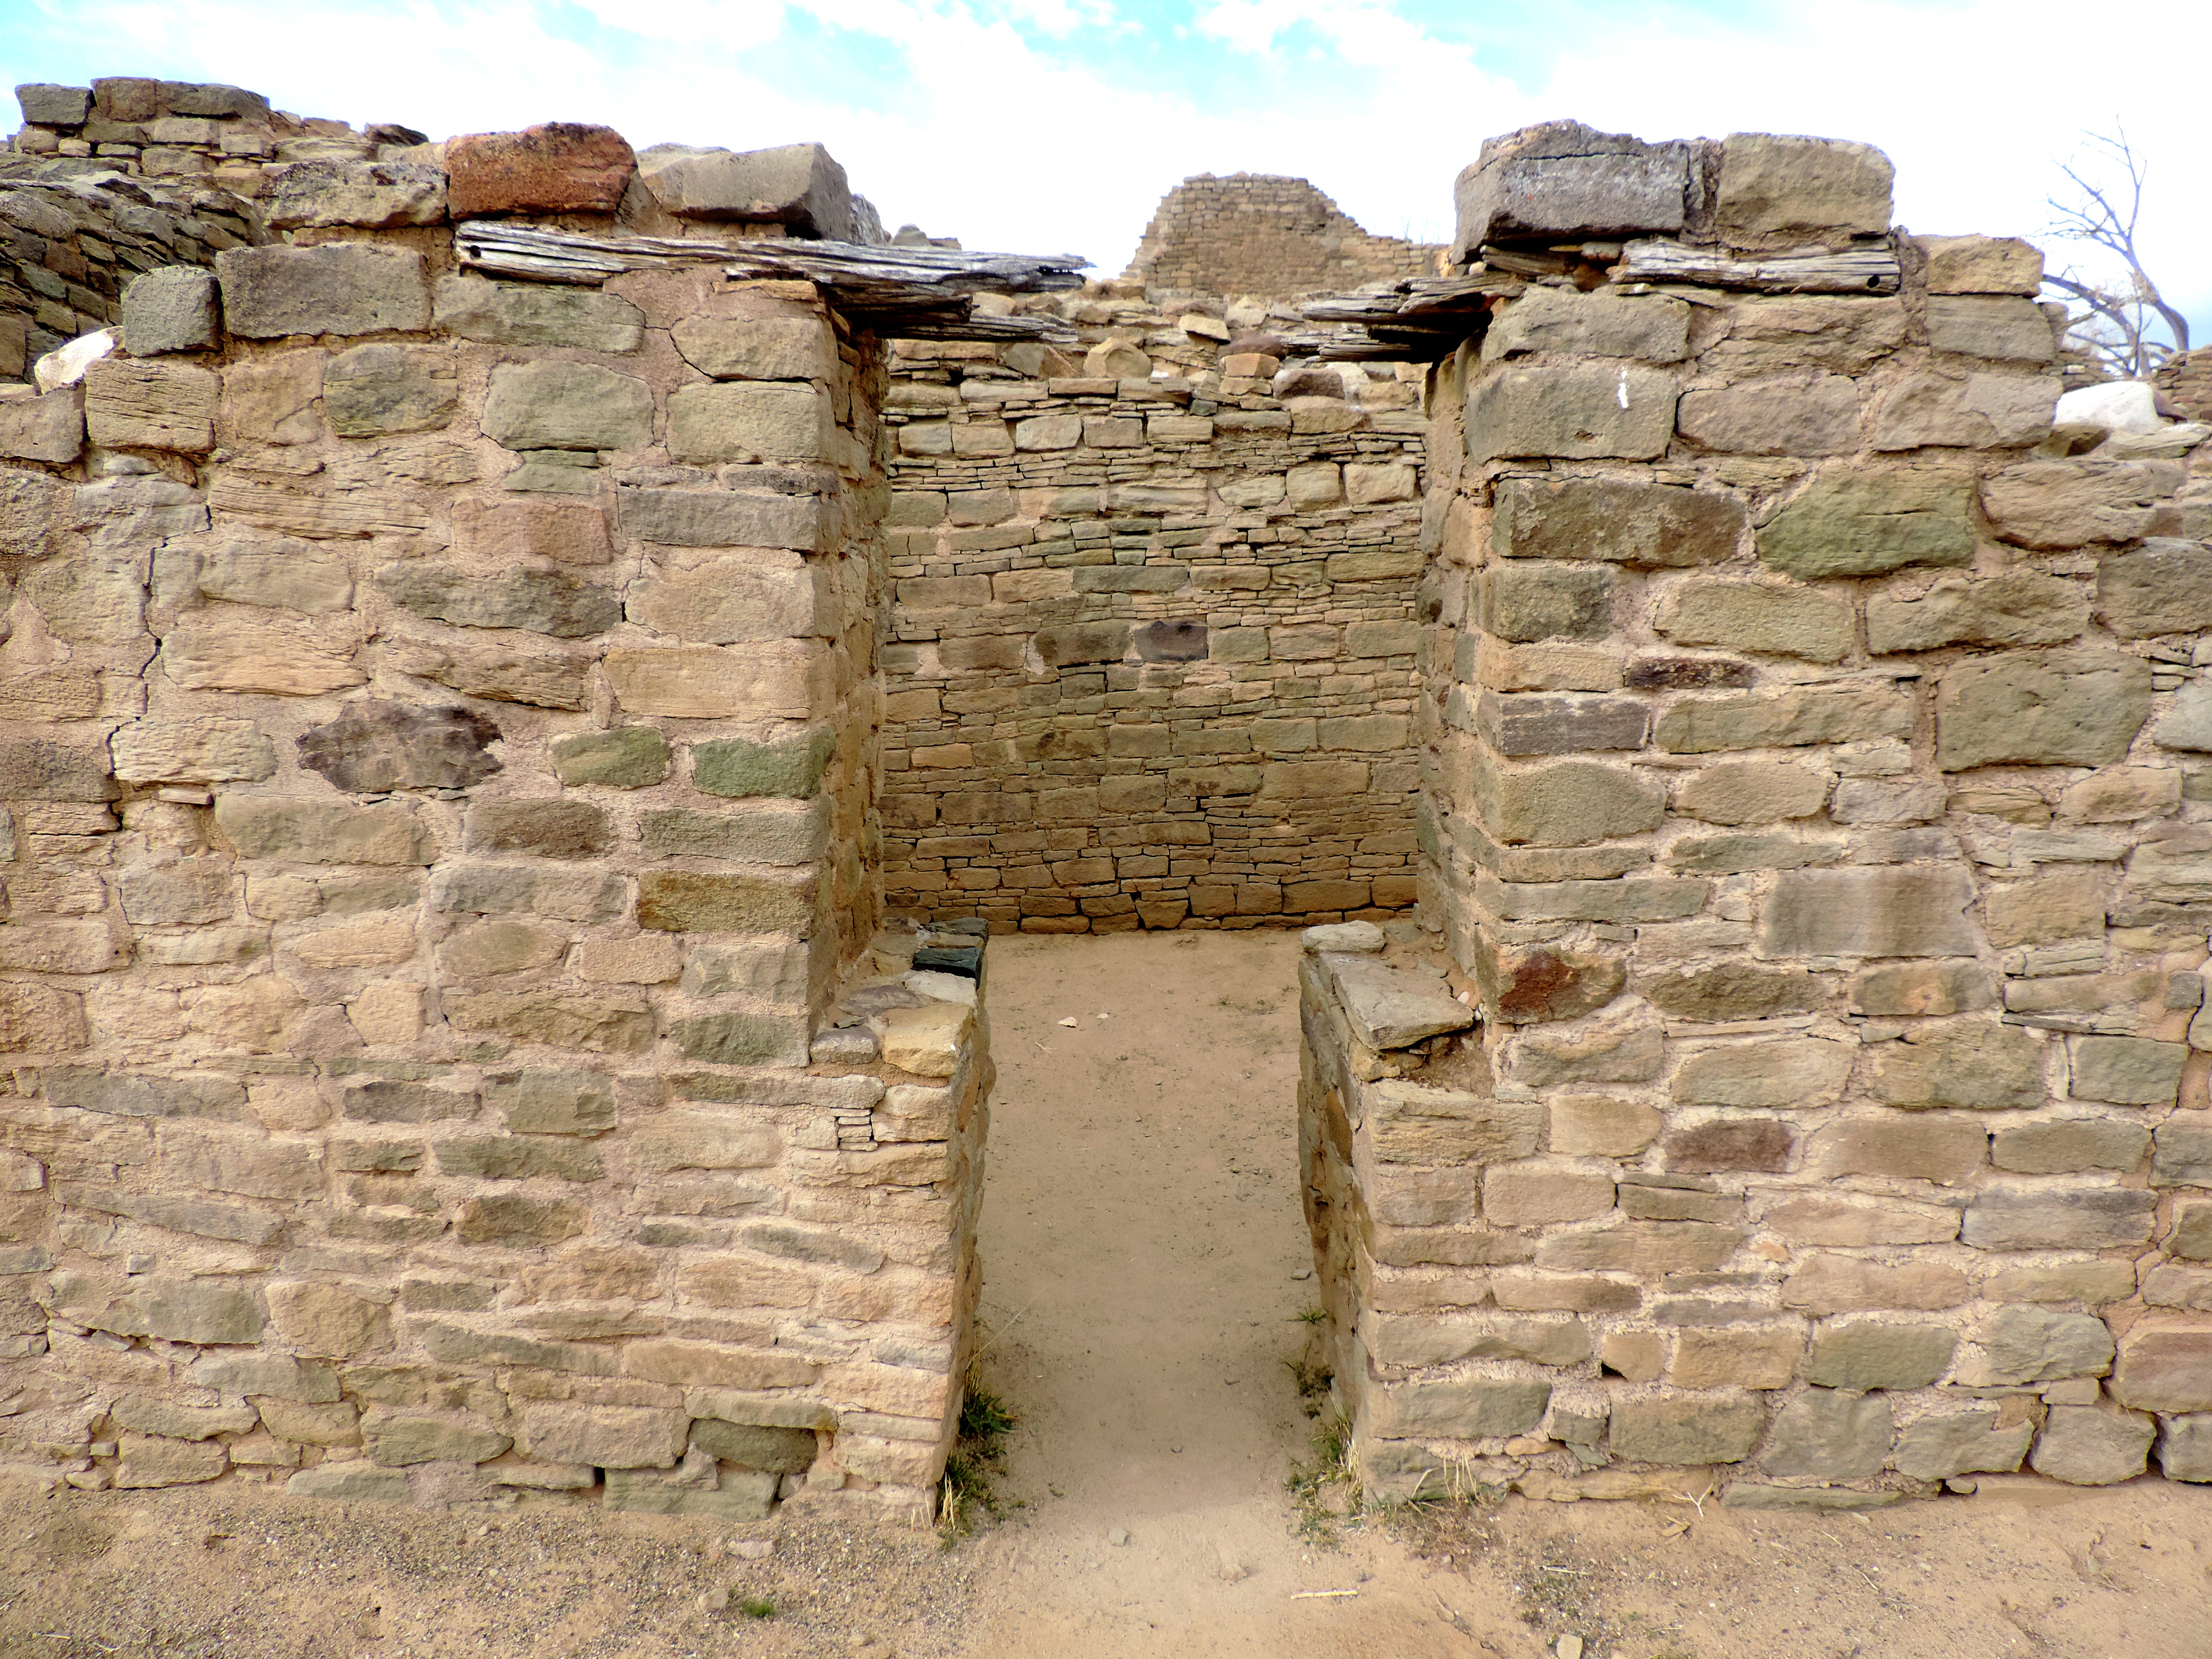 Original "T-shaped" doorway in stone ruins